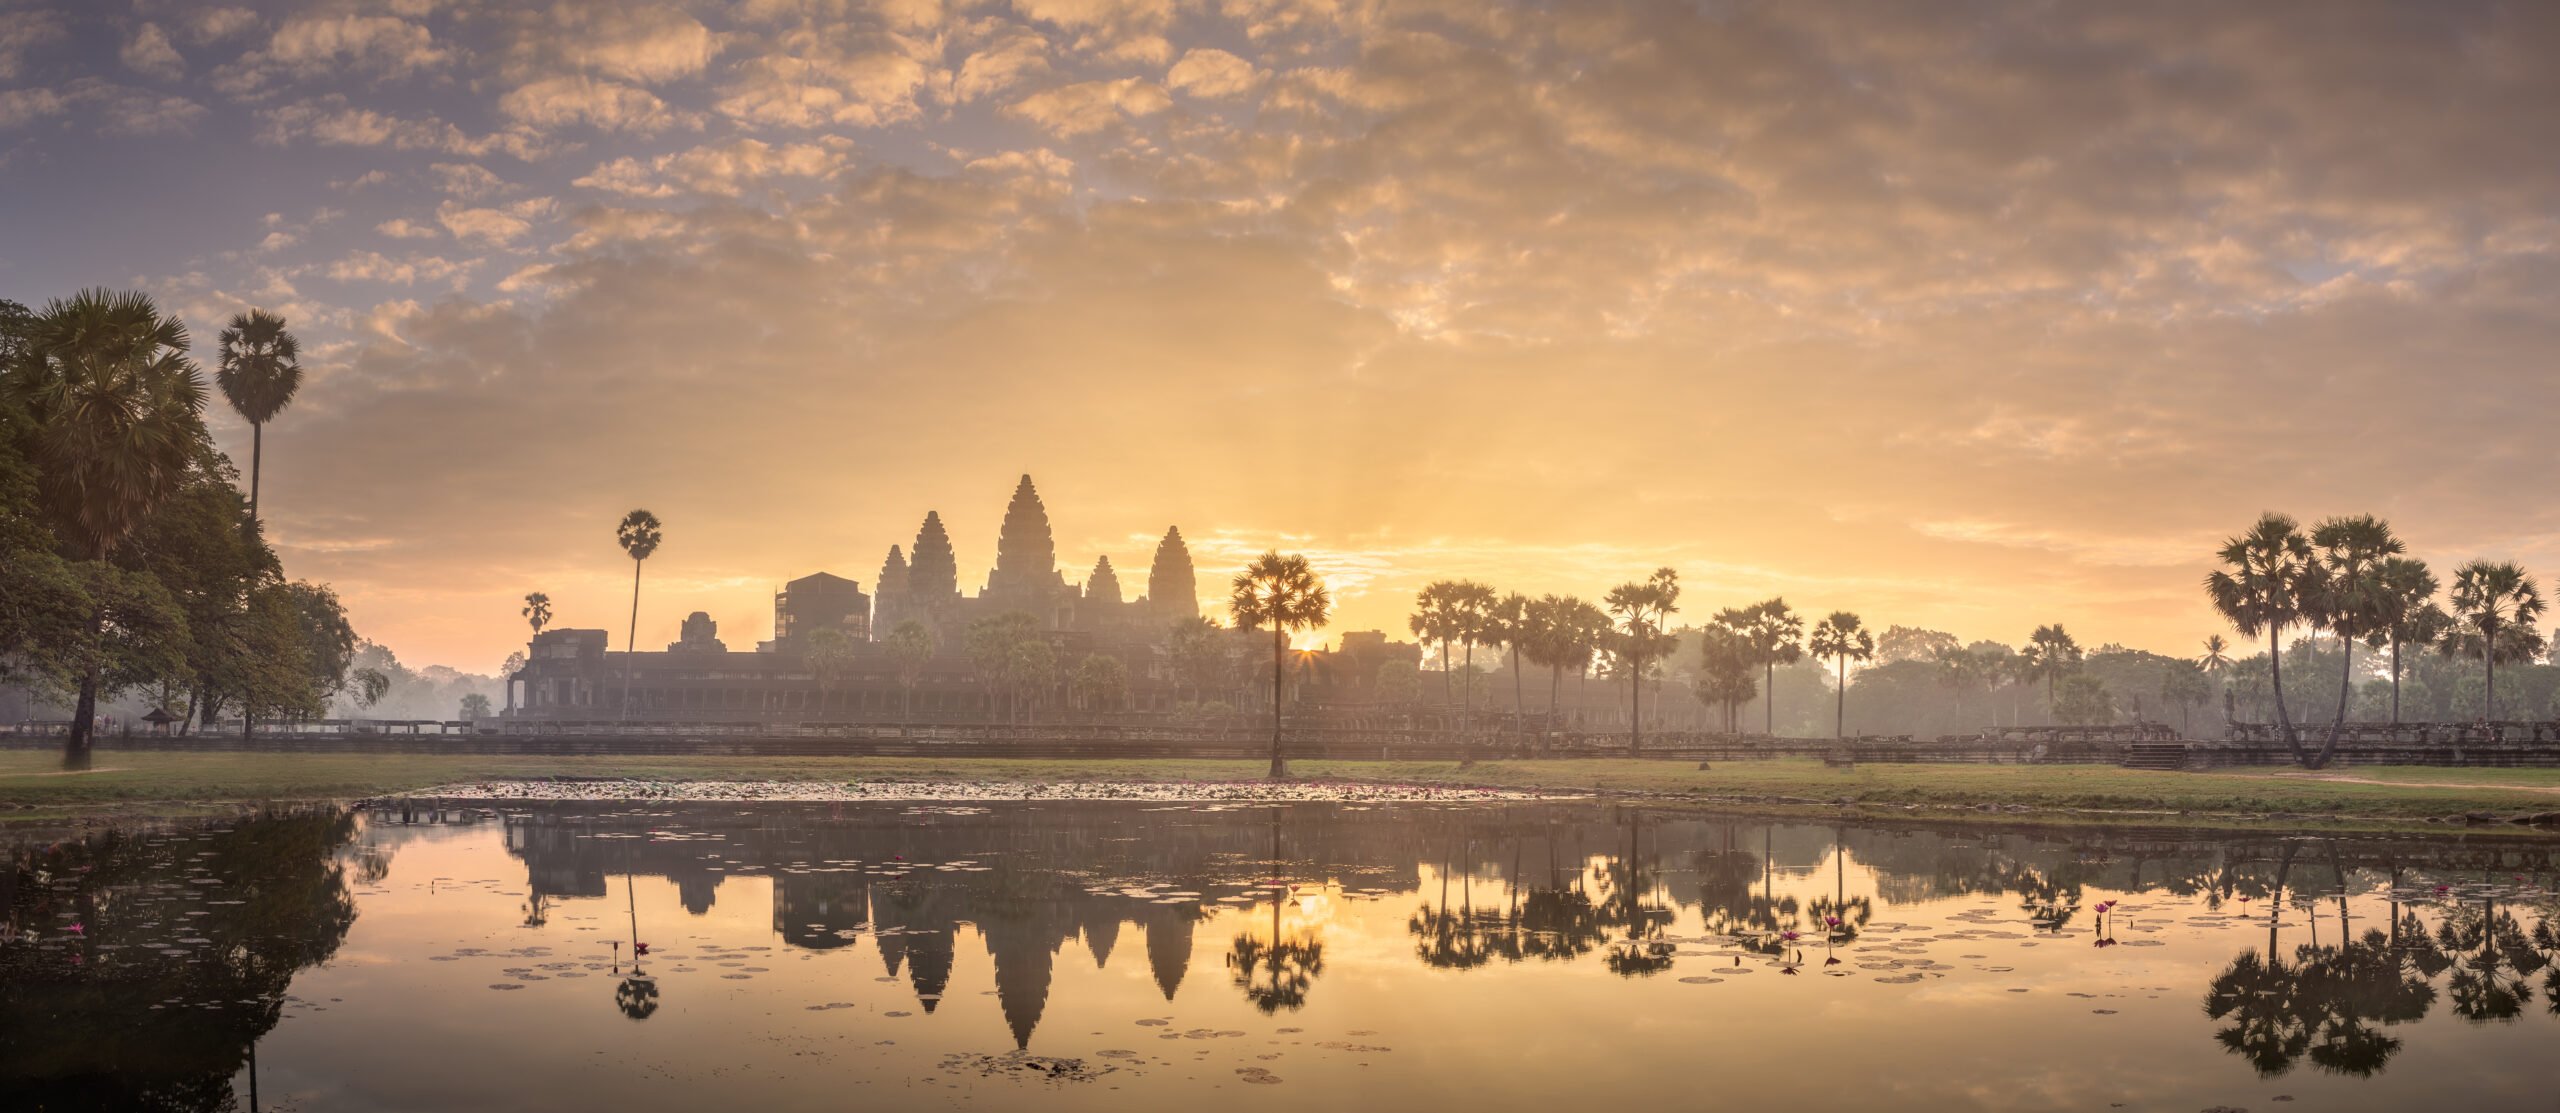 Cambodia Travel